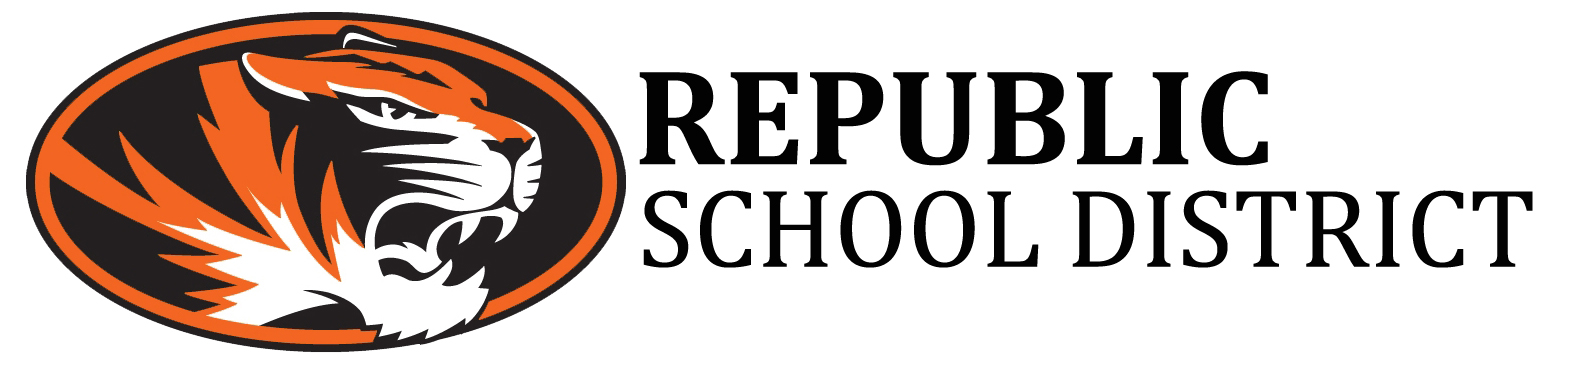 Republic School District Logo